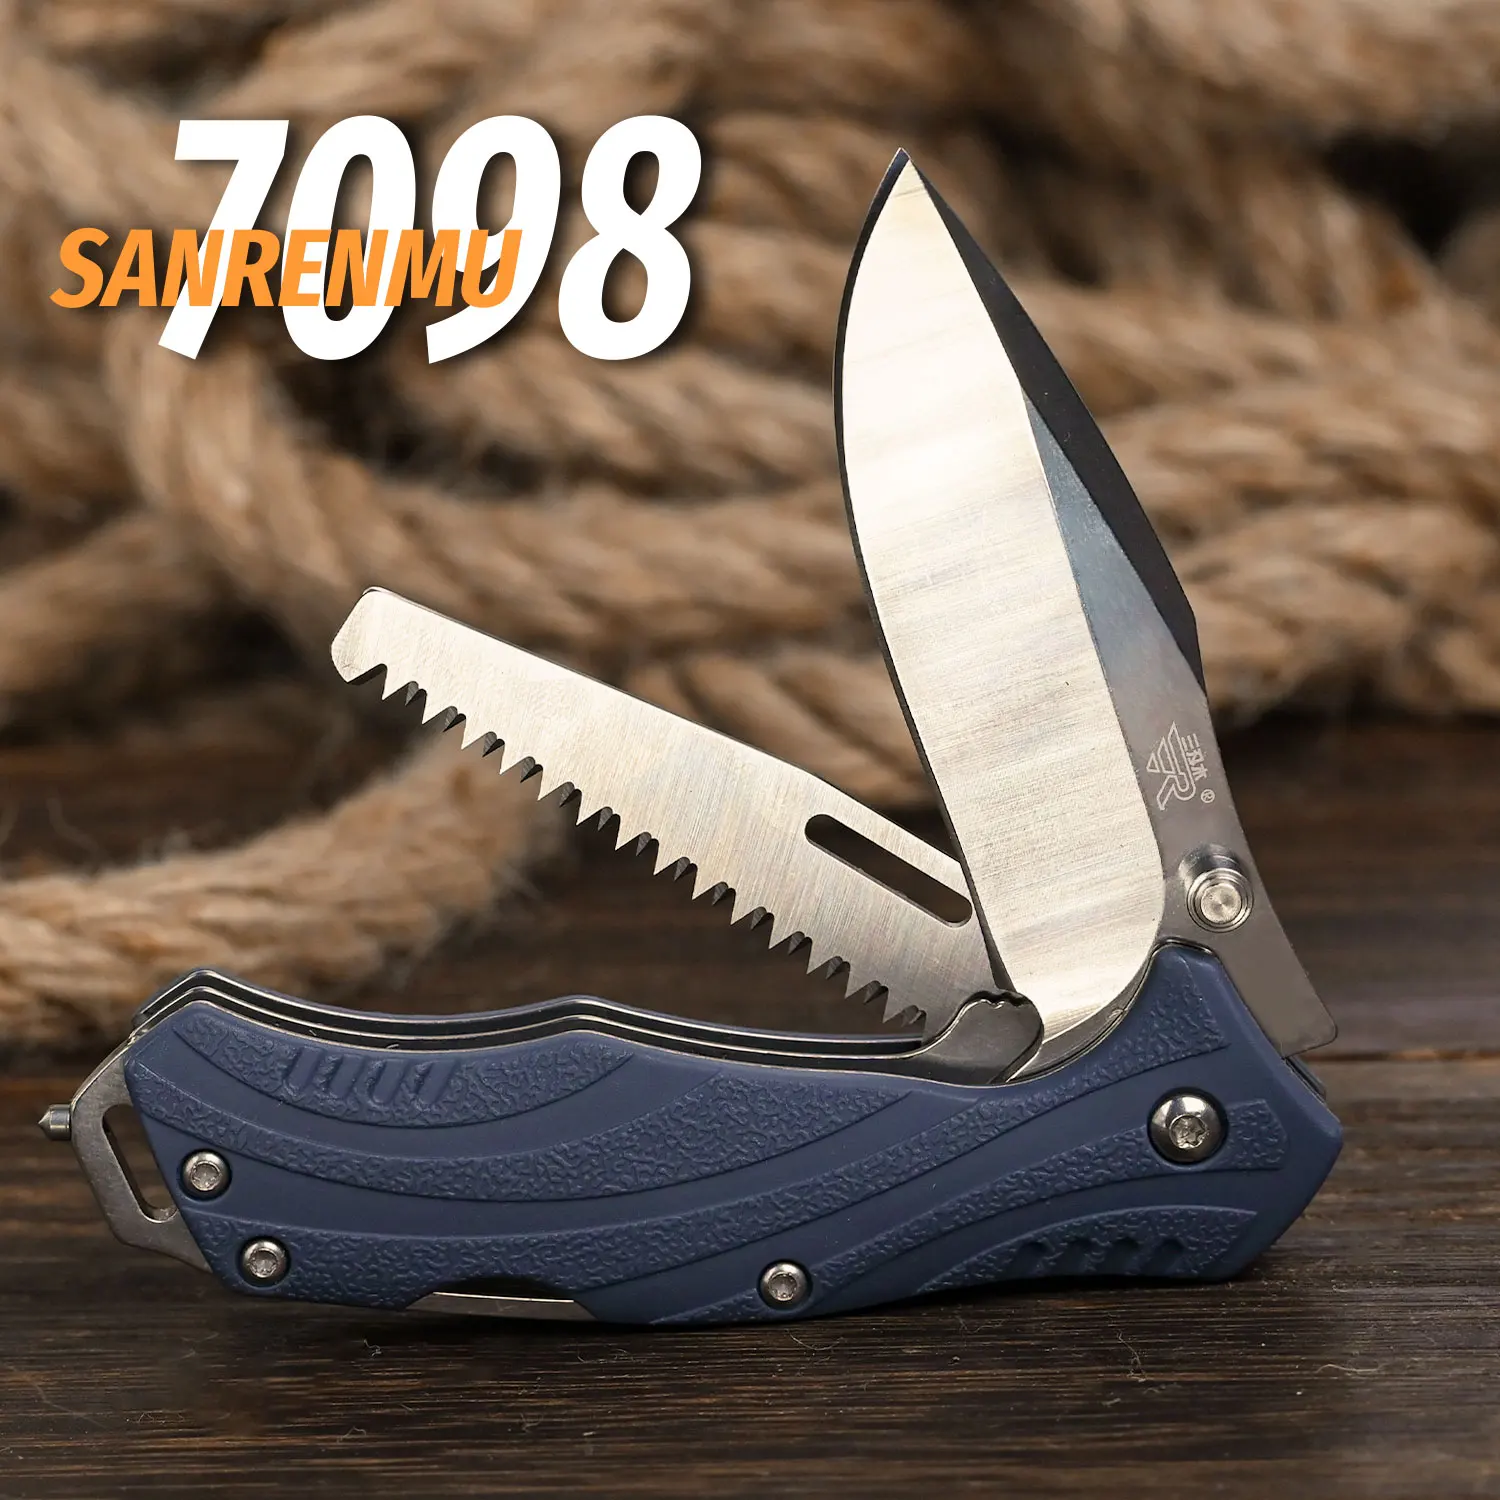 

SANRENMU 7098 Tool Knife 12c27 Blade Outdoor Camping Hunting Survival Rescue EDC Saw Bottle Opener Multifunctional Folding Knife